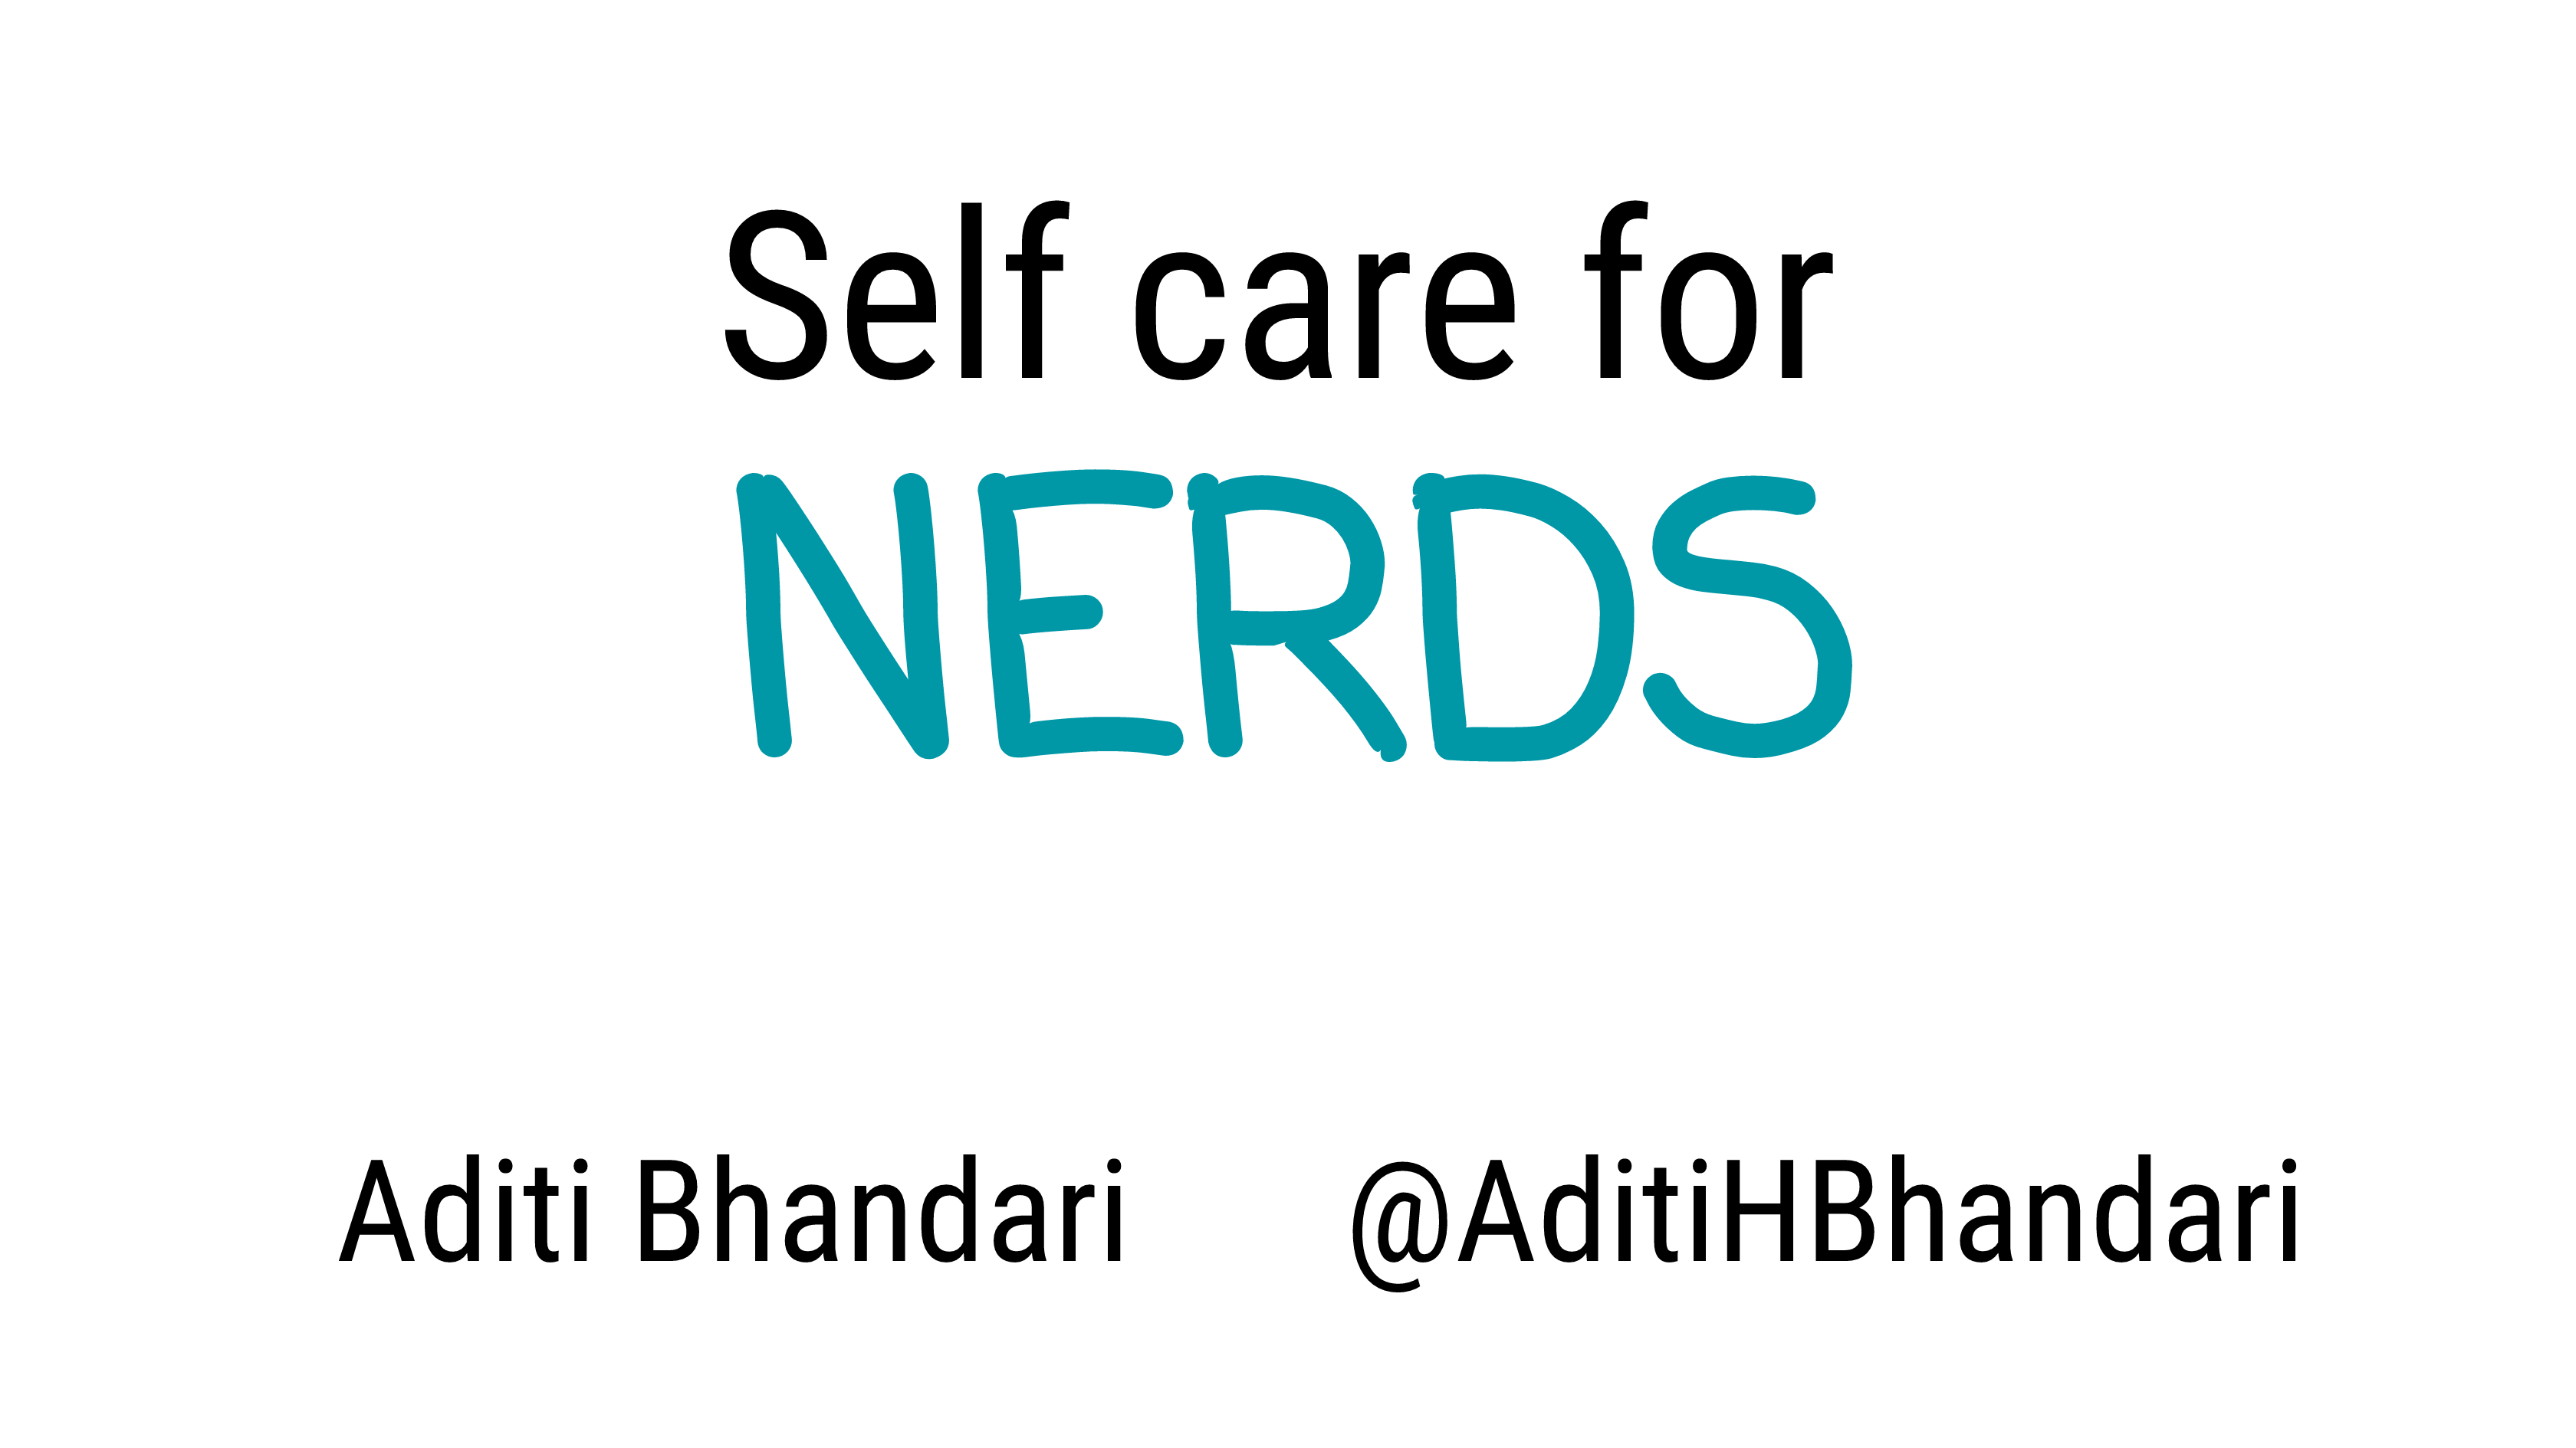 Slide 1. Self-care for Nerds by Aditi Bhandari